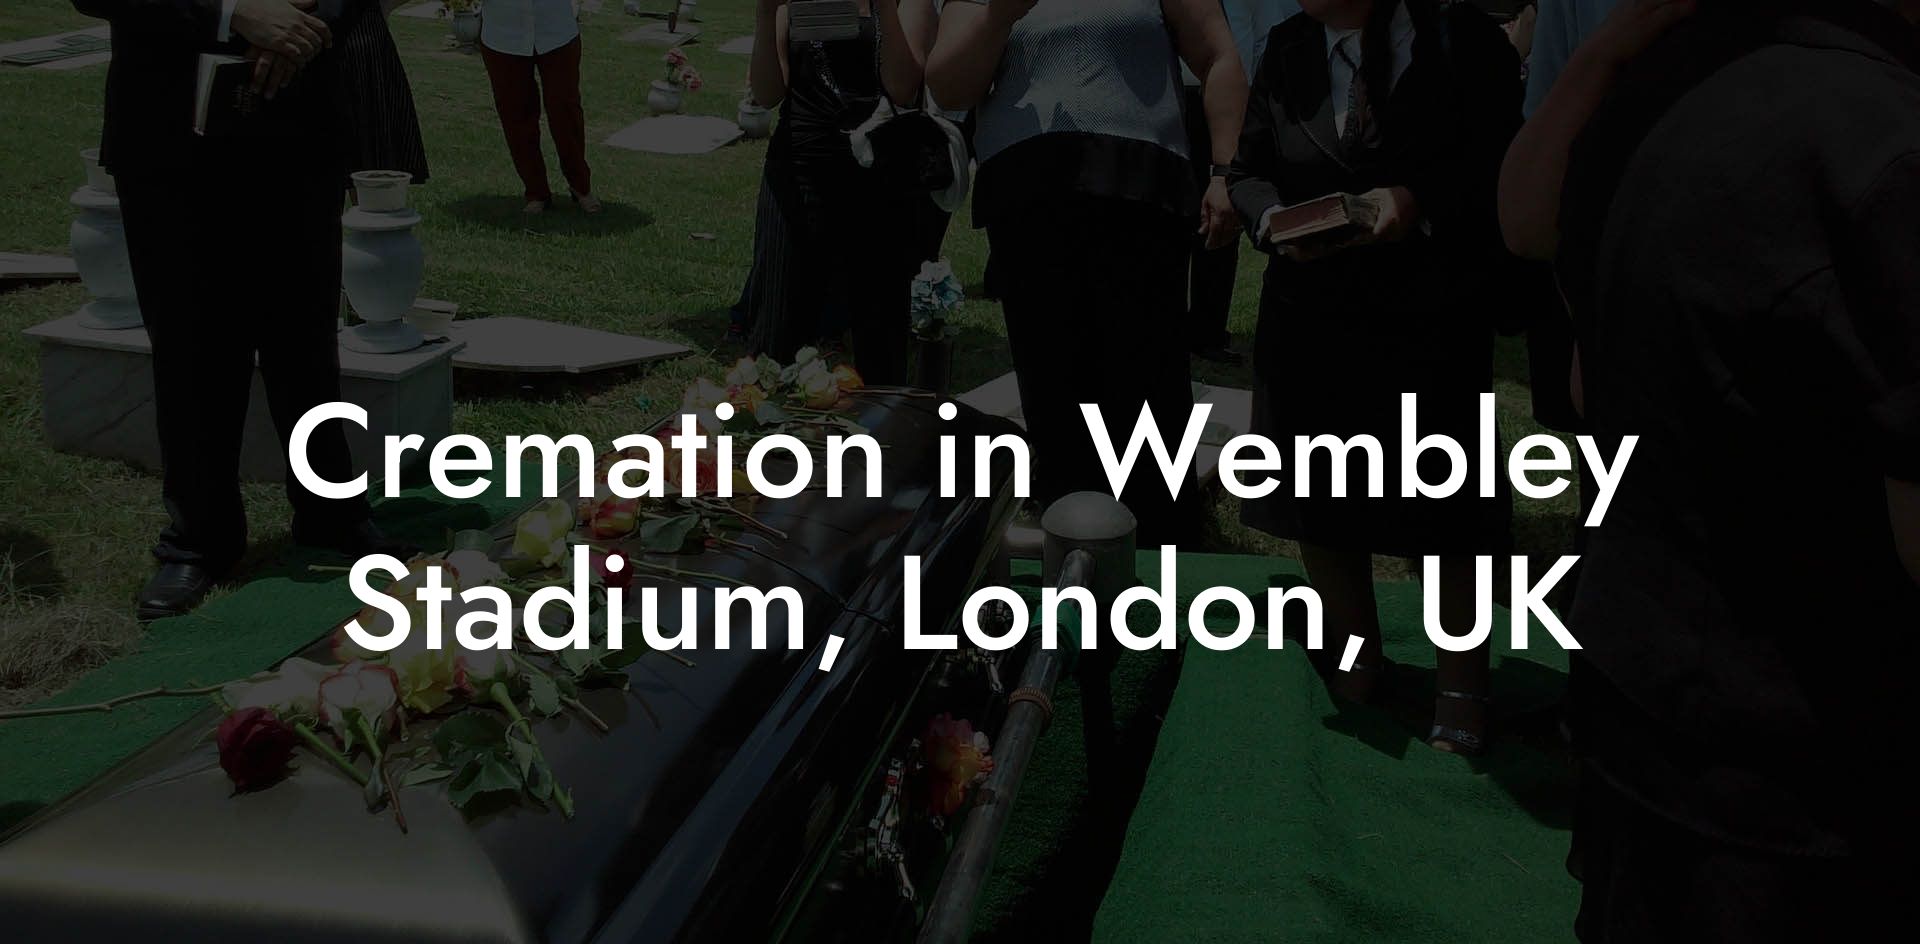 Cremation in Wembley Stadium, London, UK